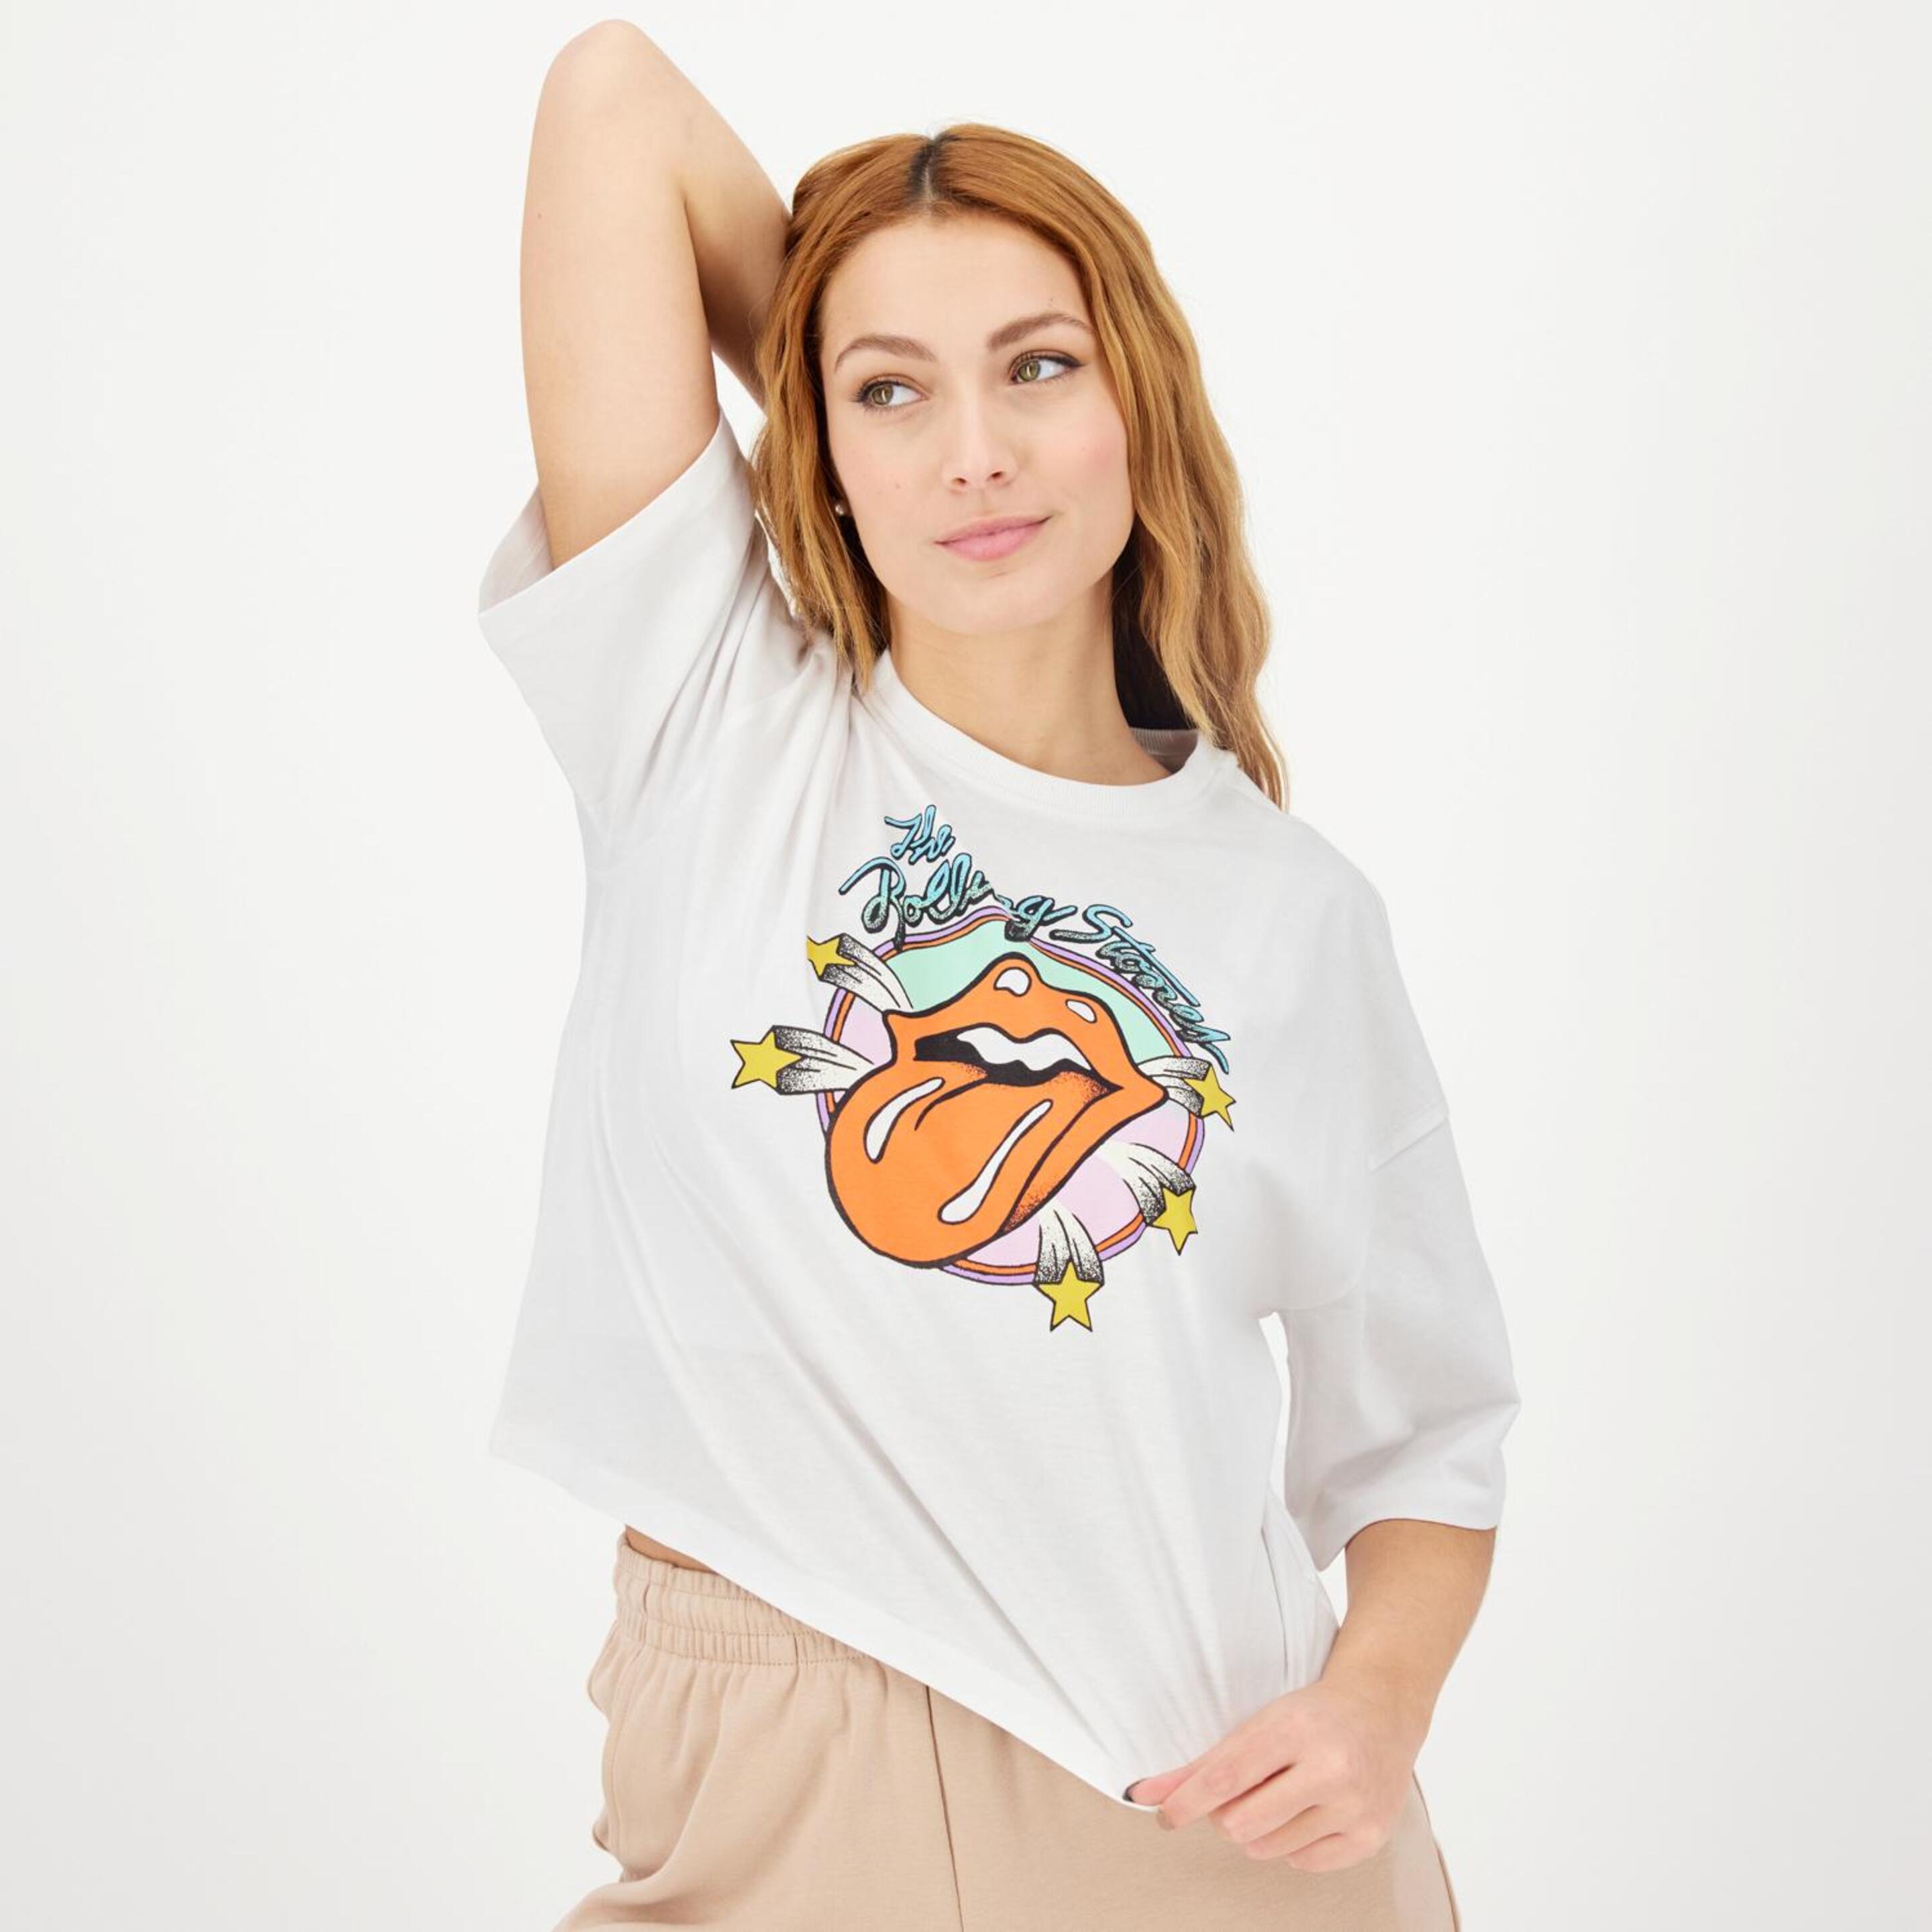 Camiseta Rolling Stones - blanco - Camiseta Mujer